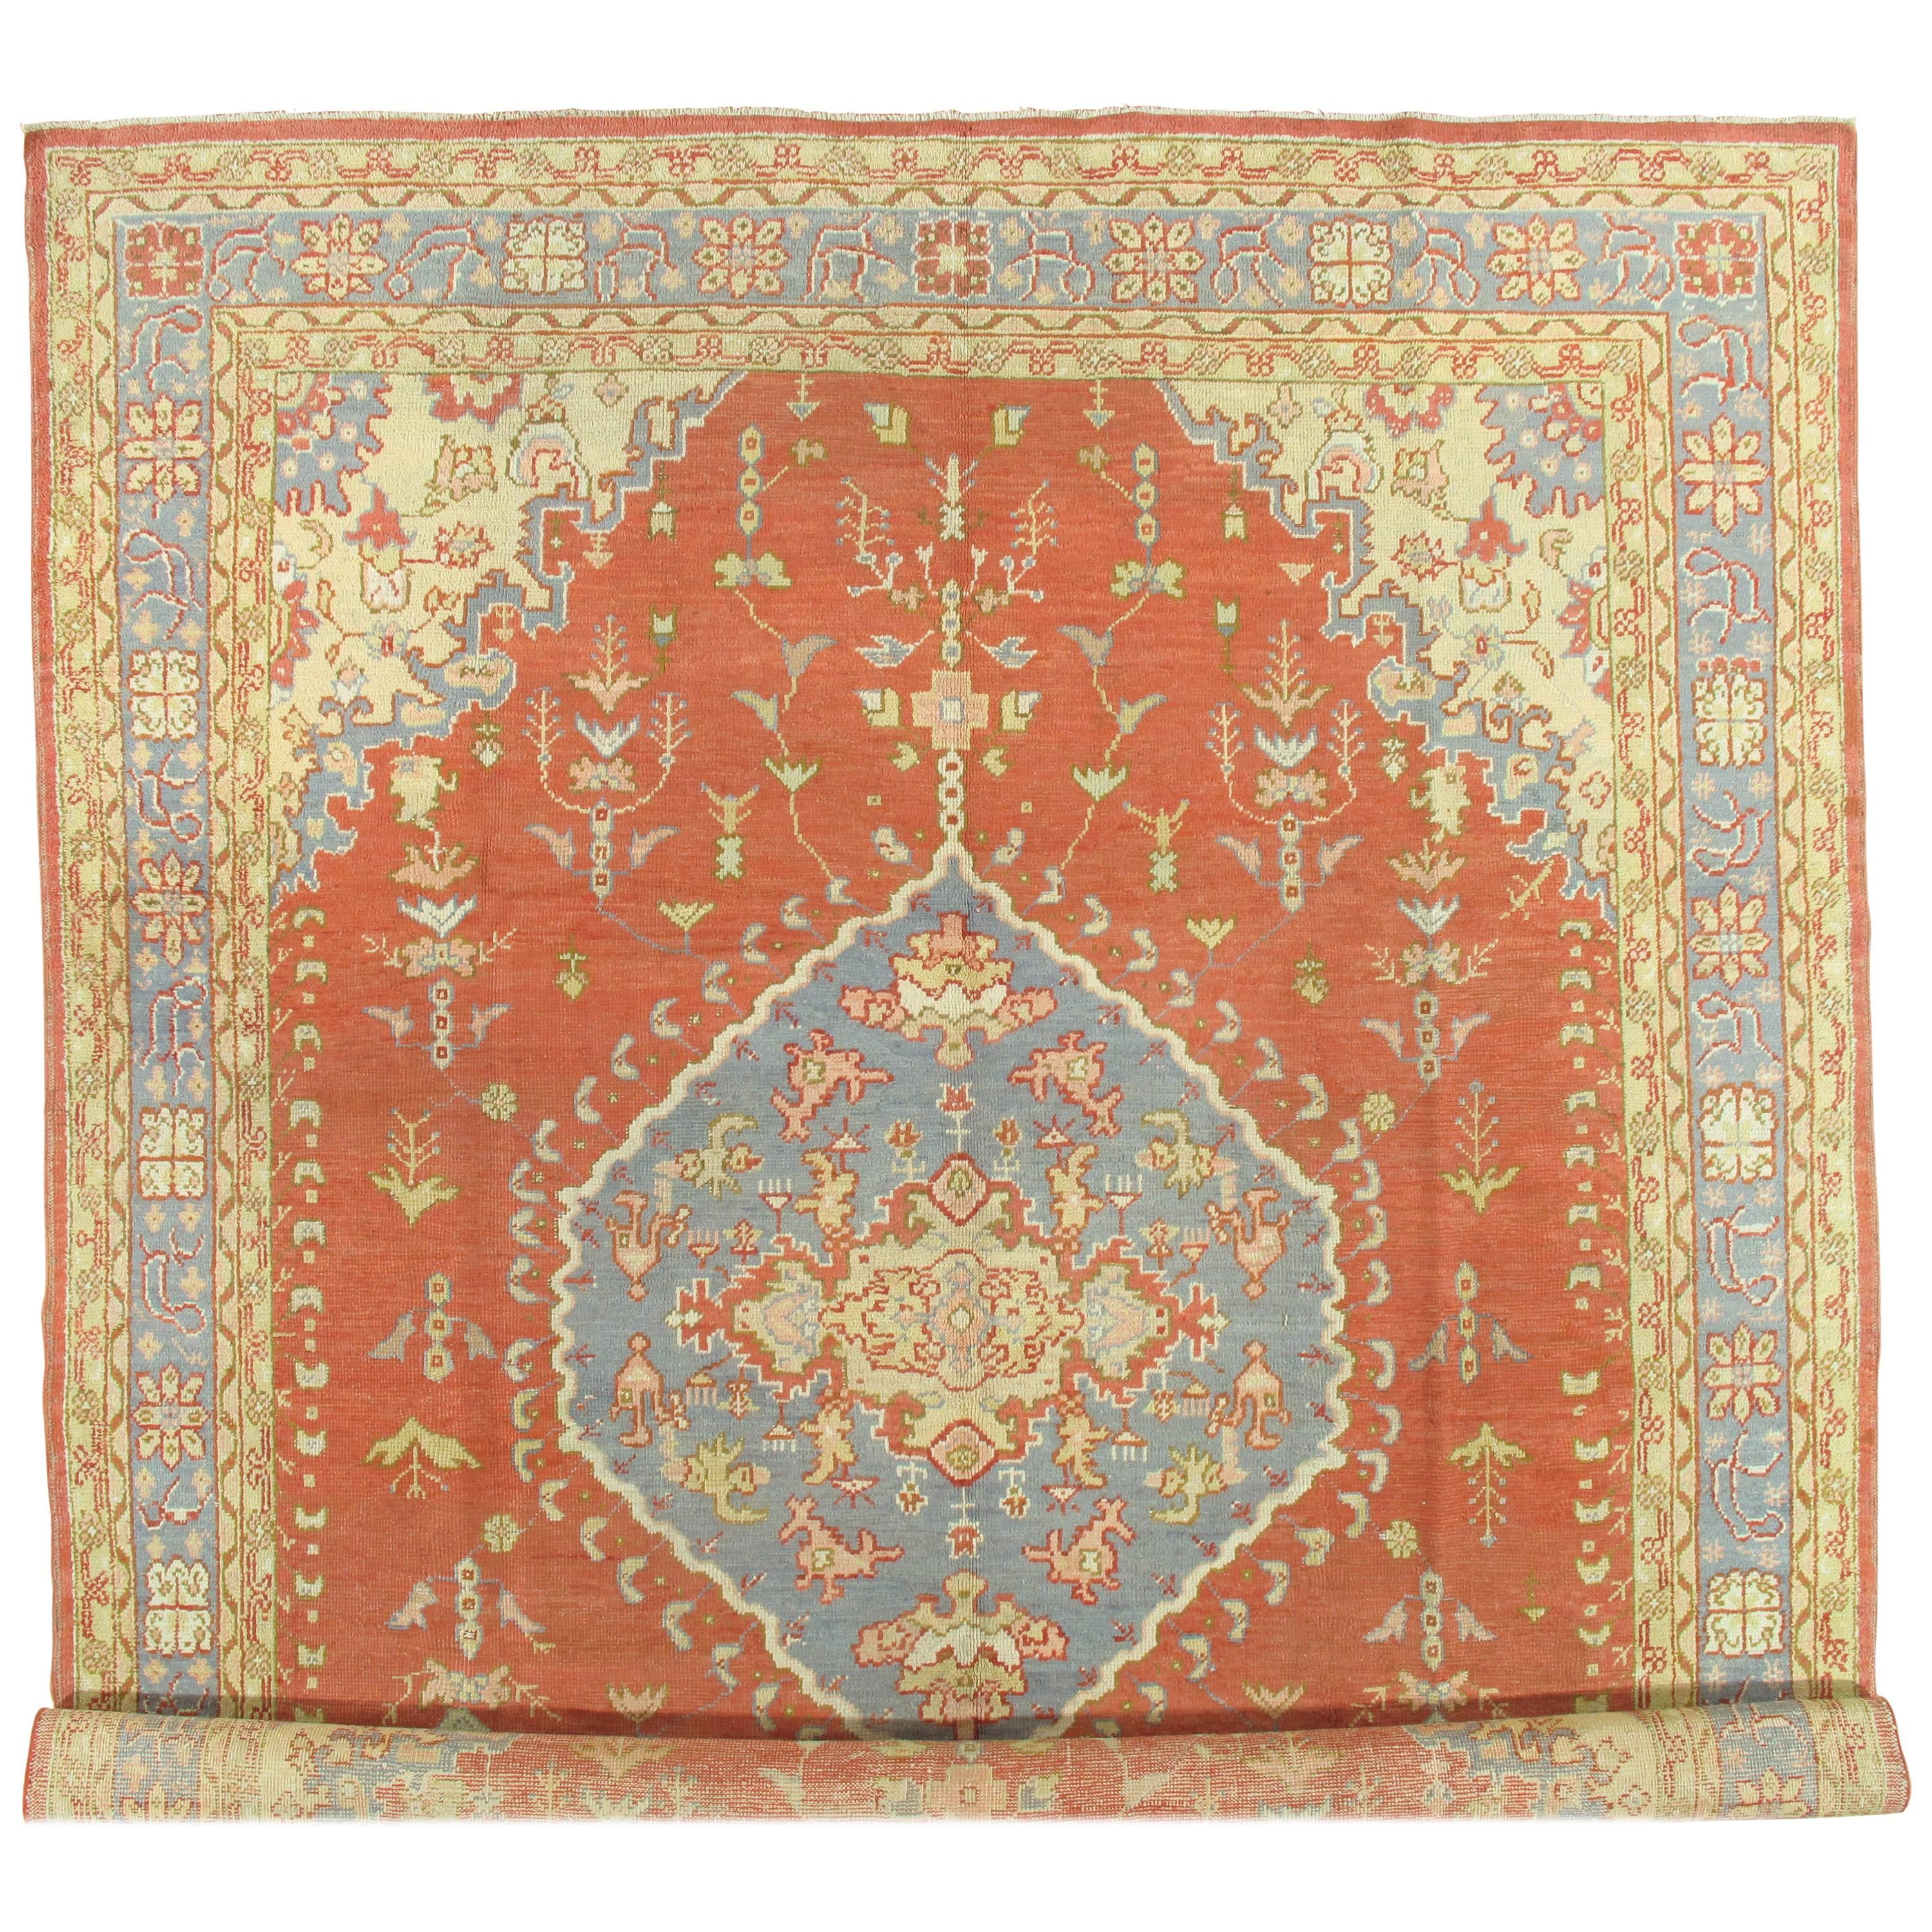 Antique Oushak Carpet, Handmade Oriental Rug, Coral and Light Blue Fine Rug